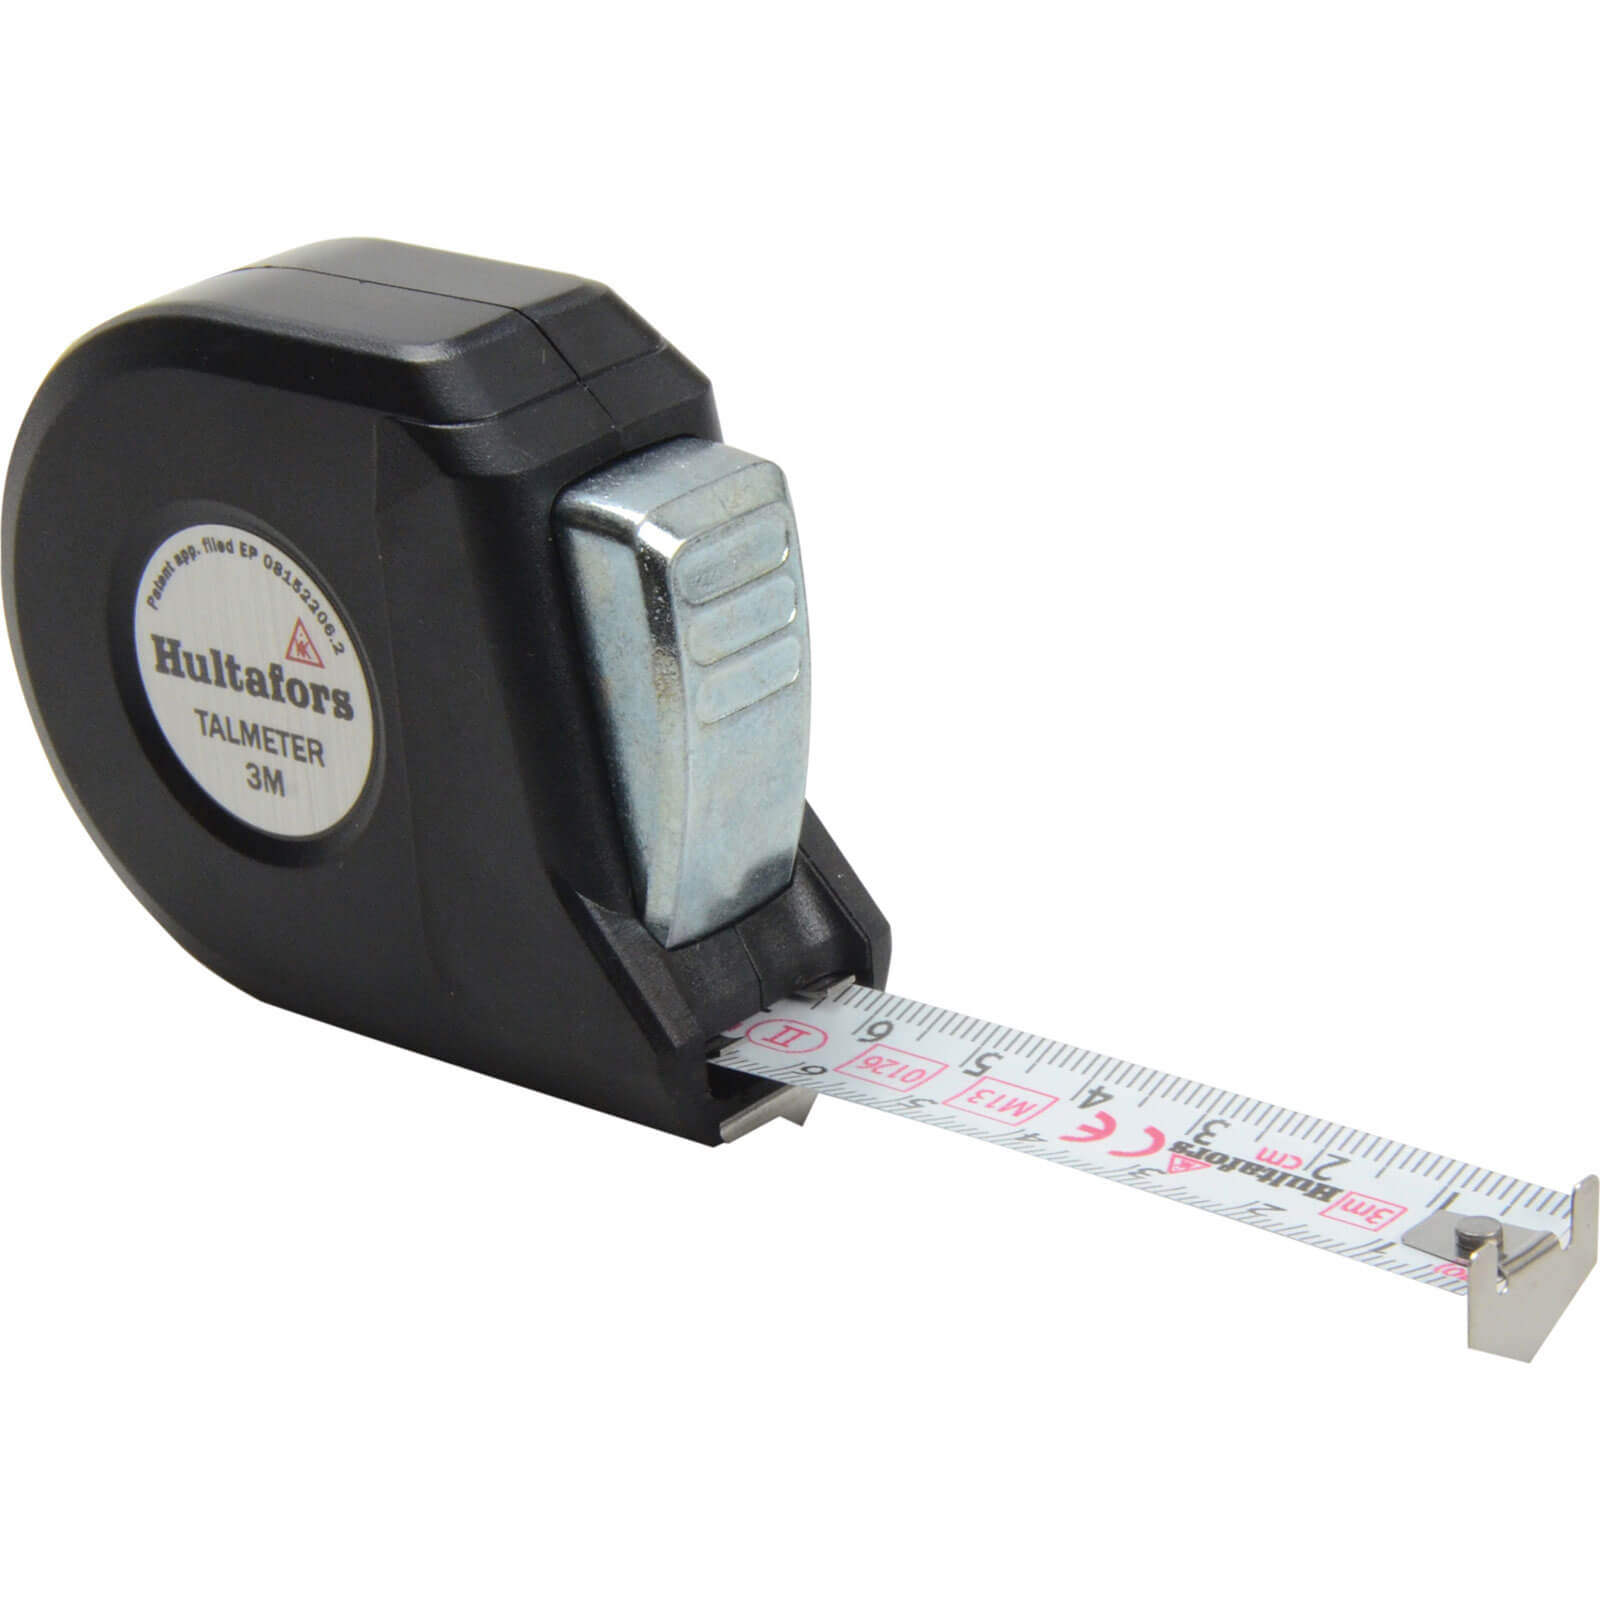 Image of Hultafors Talmeter Marking Tape Measure Imperial & Metric 10ft / 3m 16mm